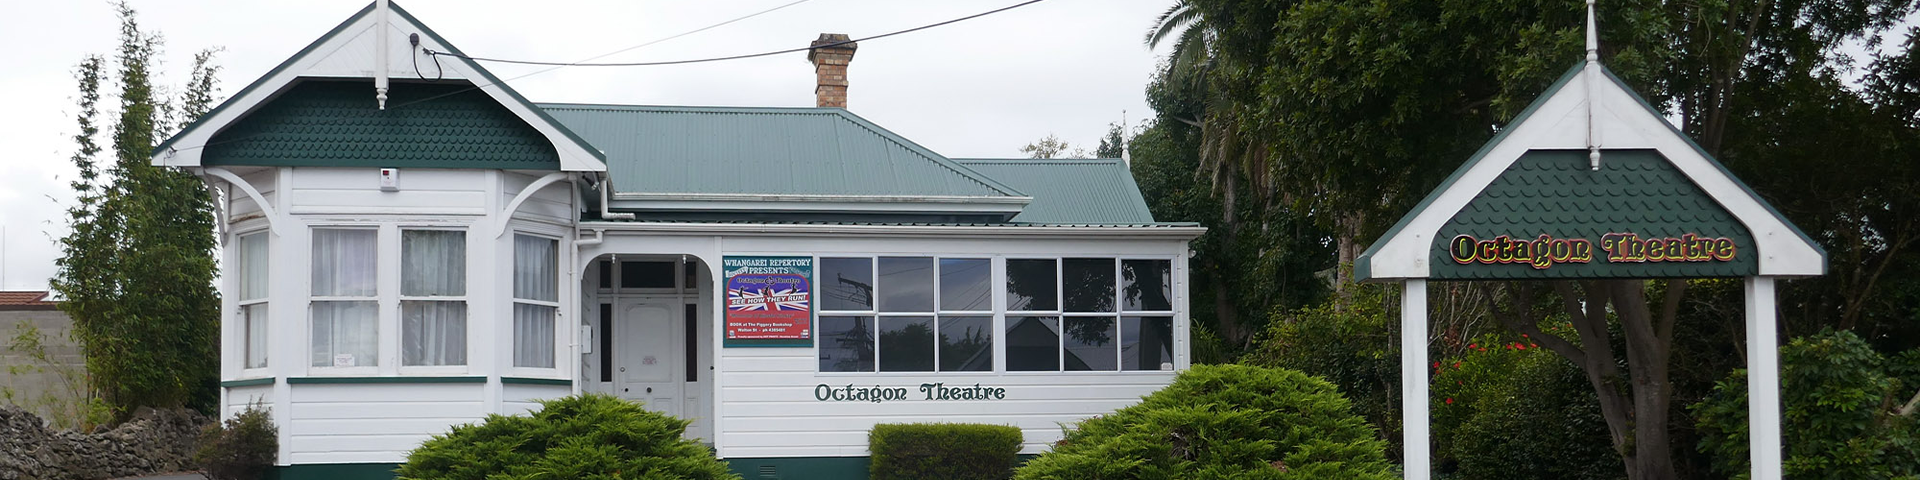 octagon theatre banner image